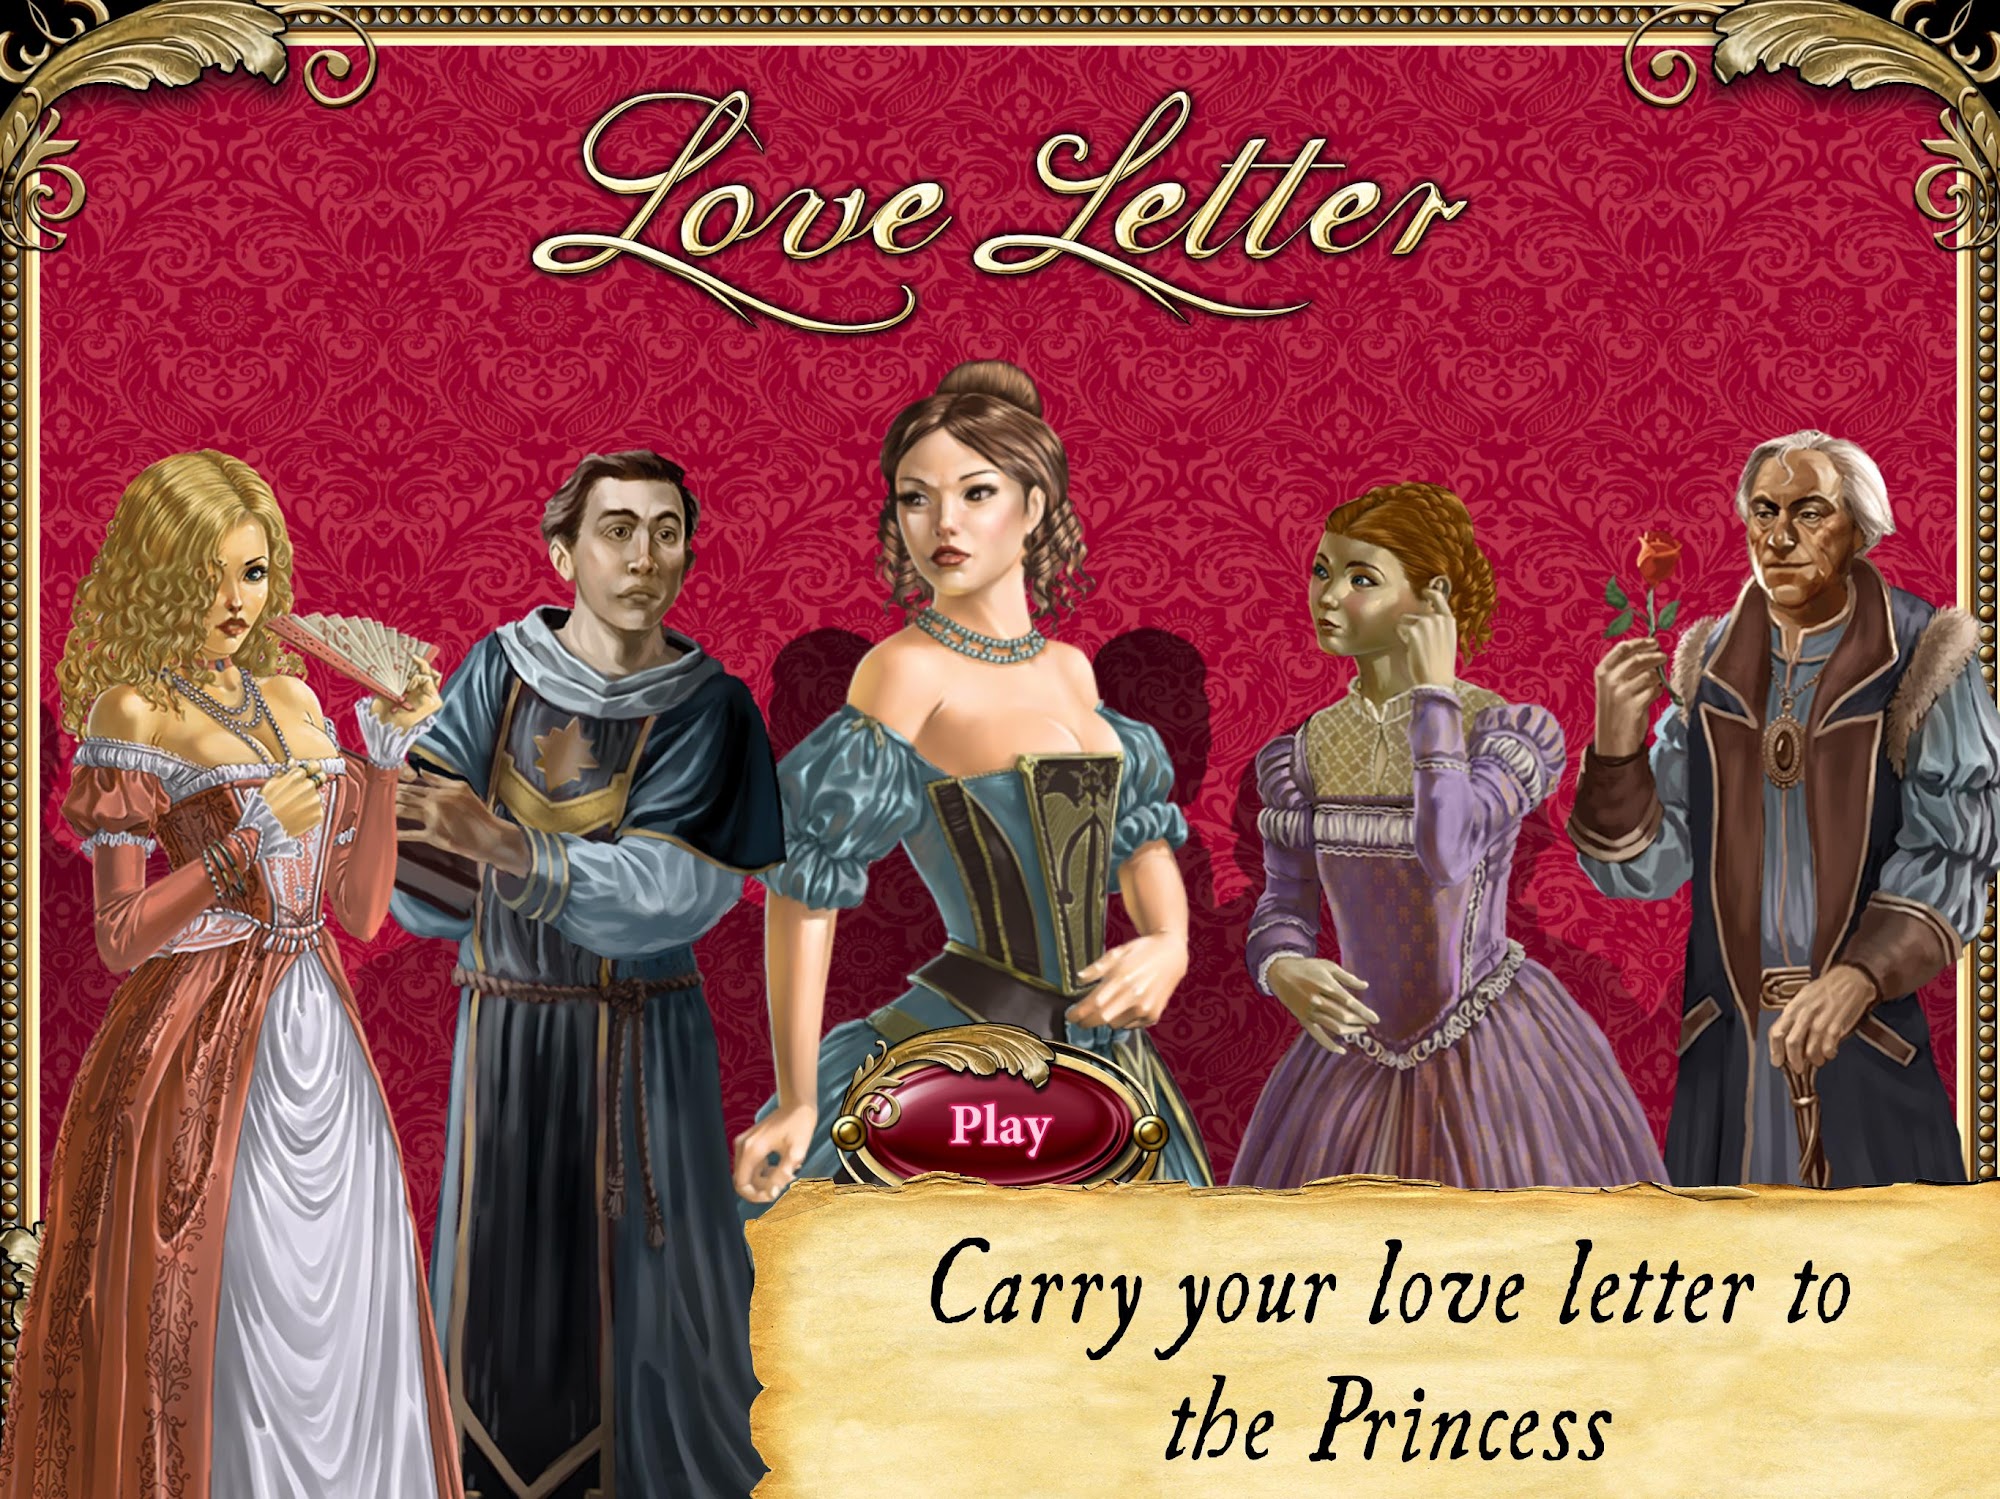 Descargar Love Letter - Strategy Card Game gratis para Android.